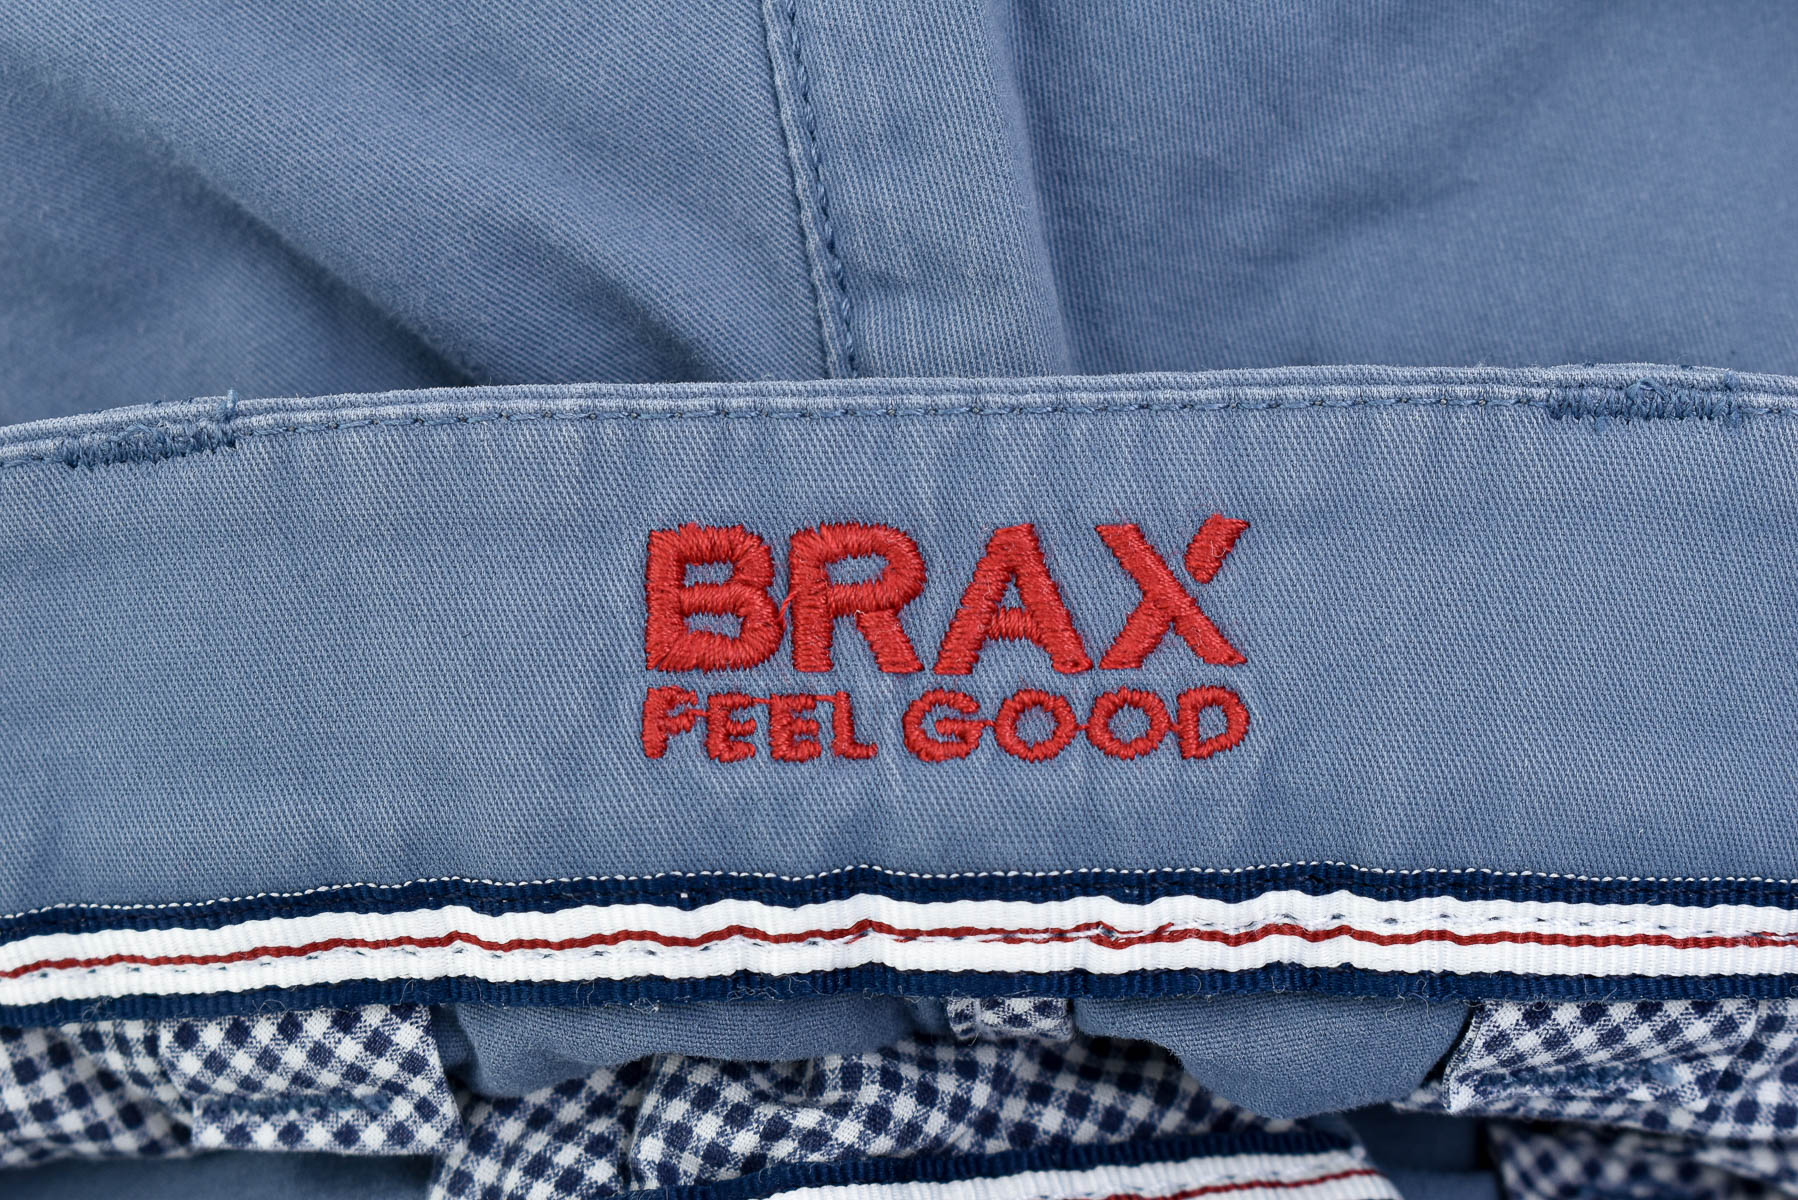 Men's trousers - BRAX - 2